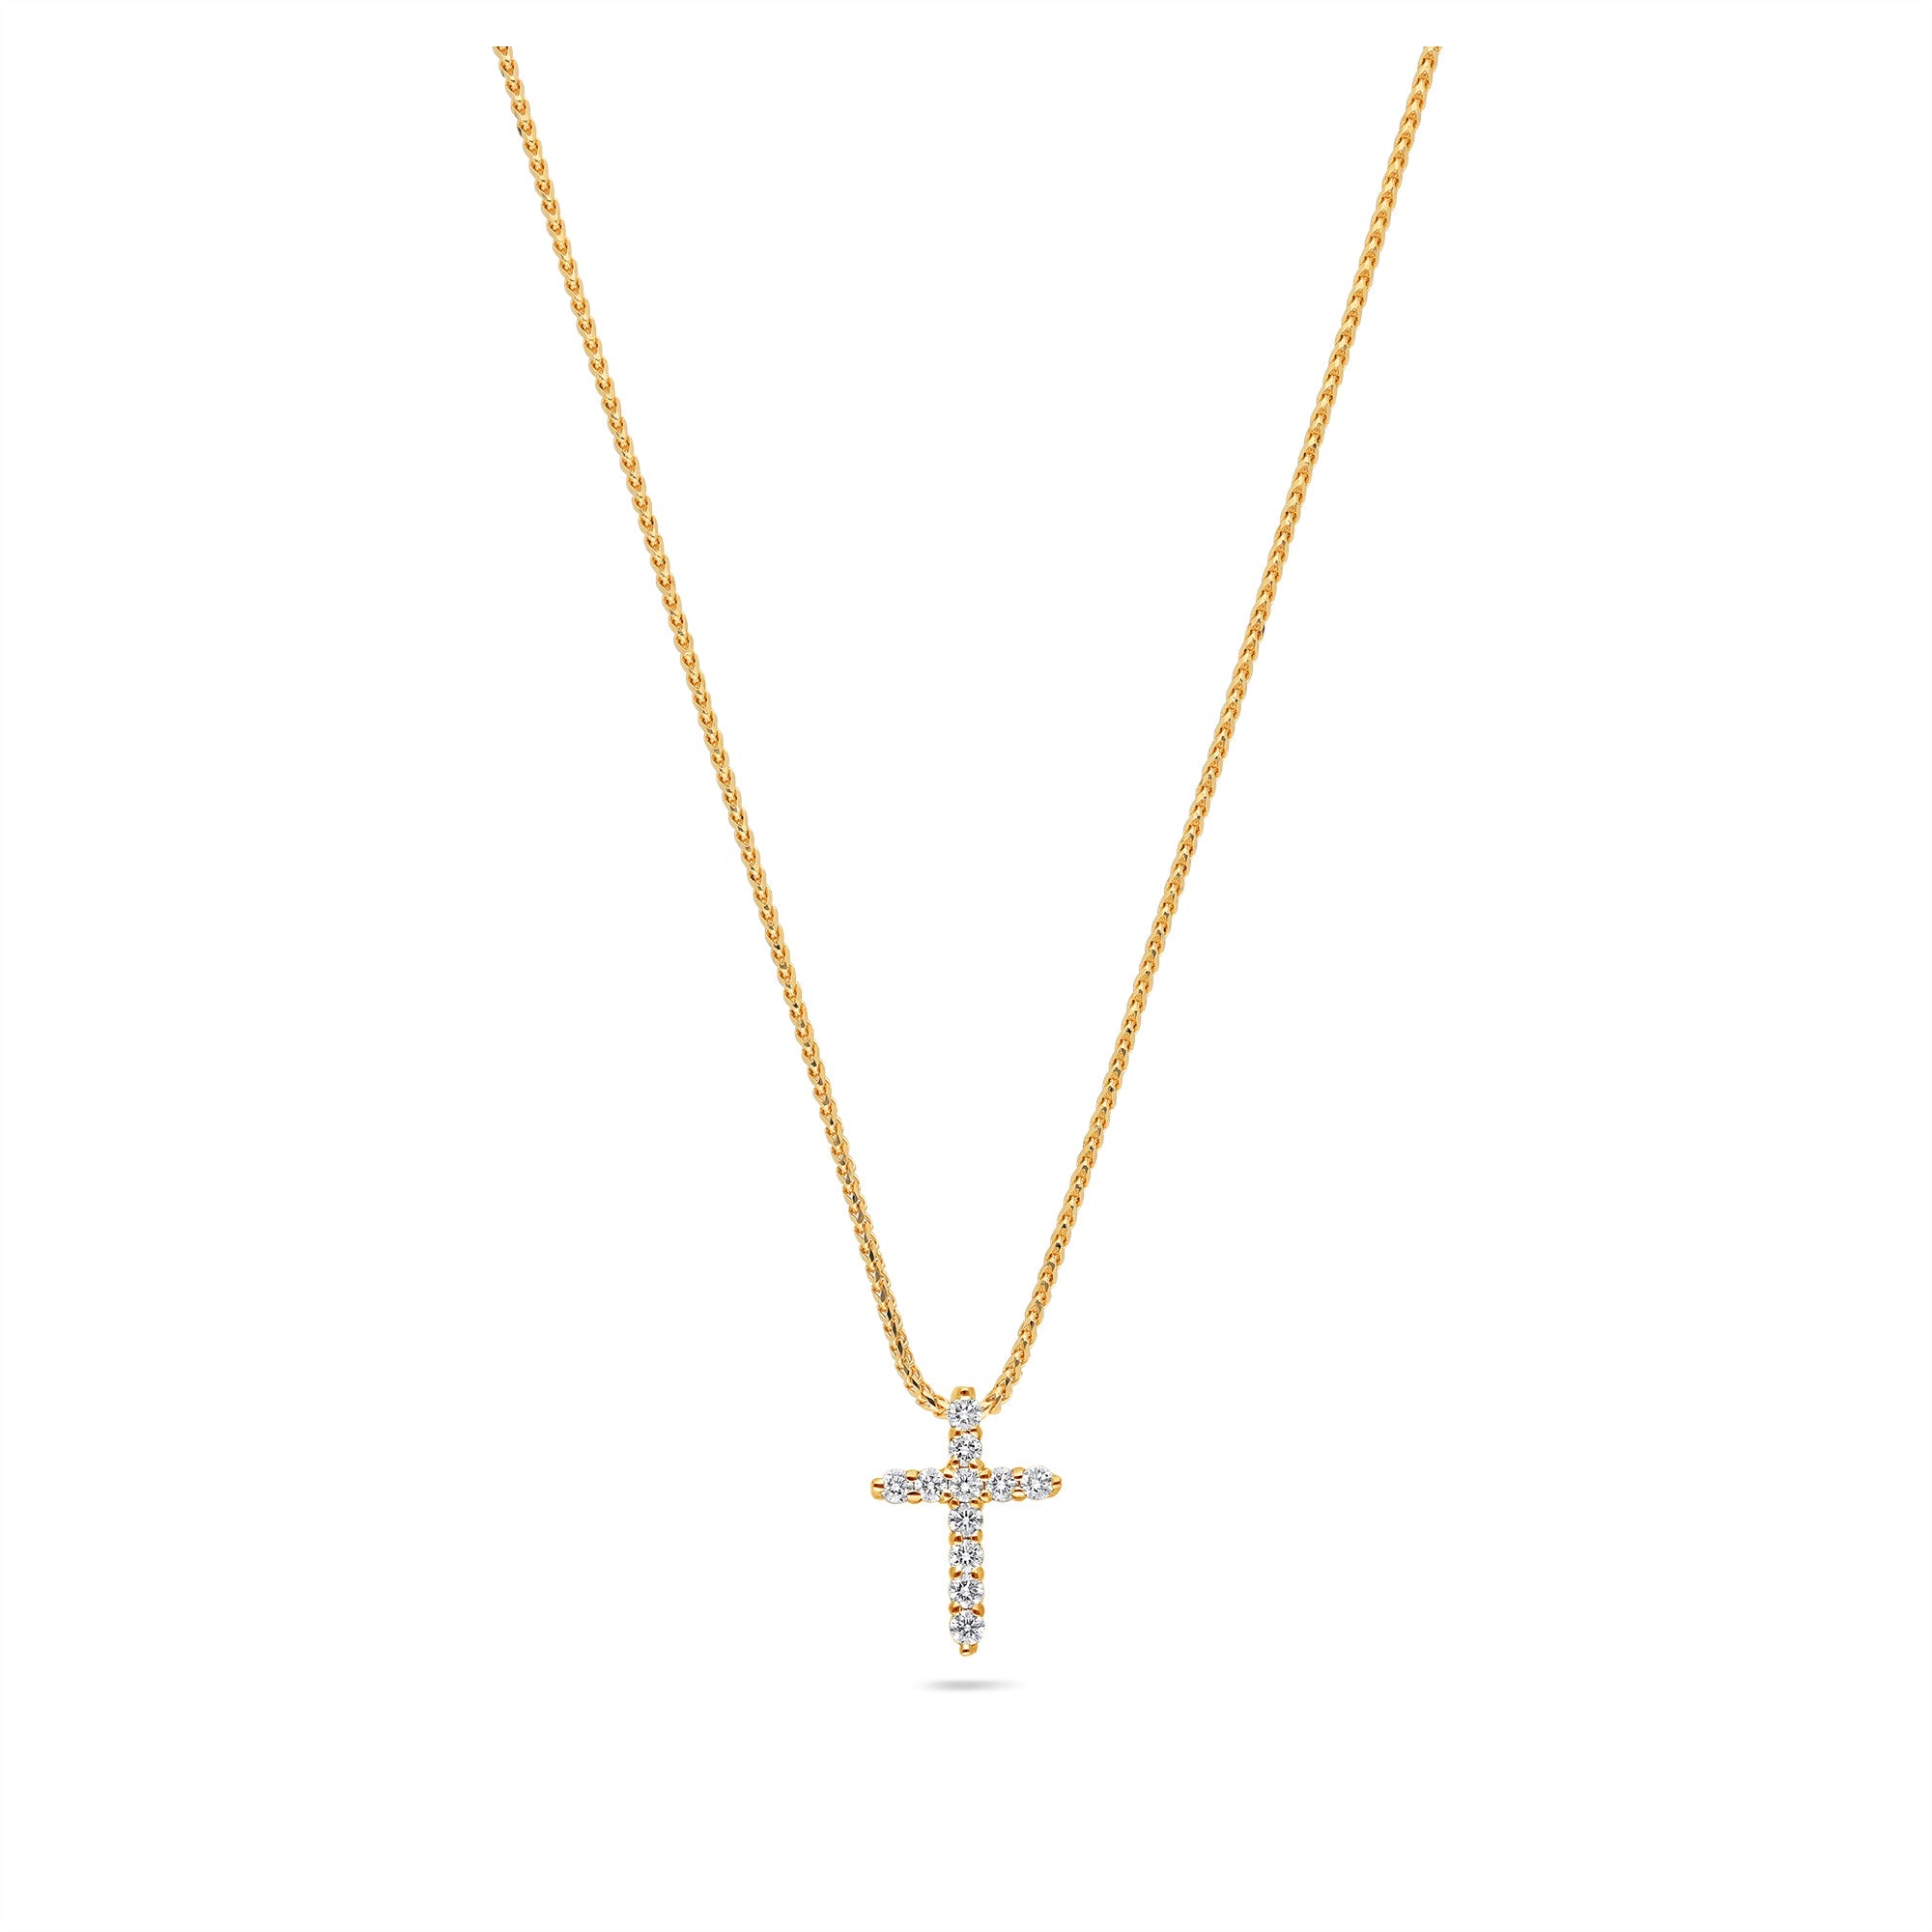 Pico Hailey Cross (14K YELLOW GOLD) - IF & Co. Custom Jewelers